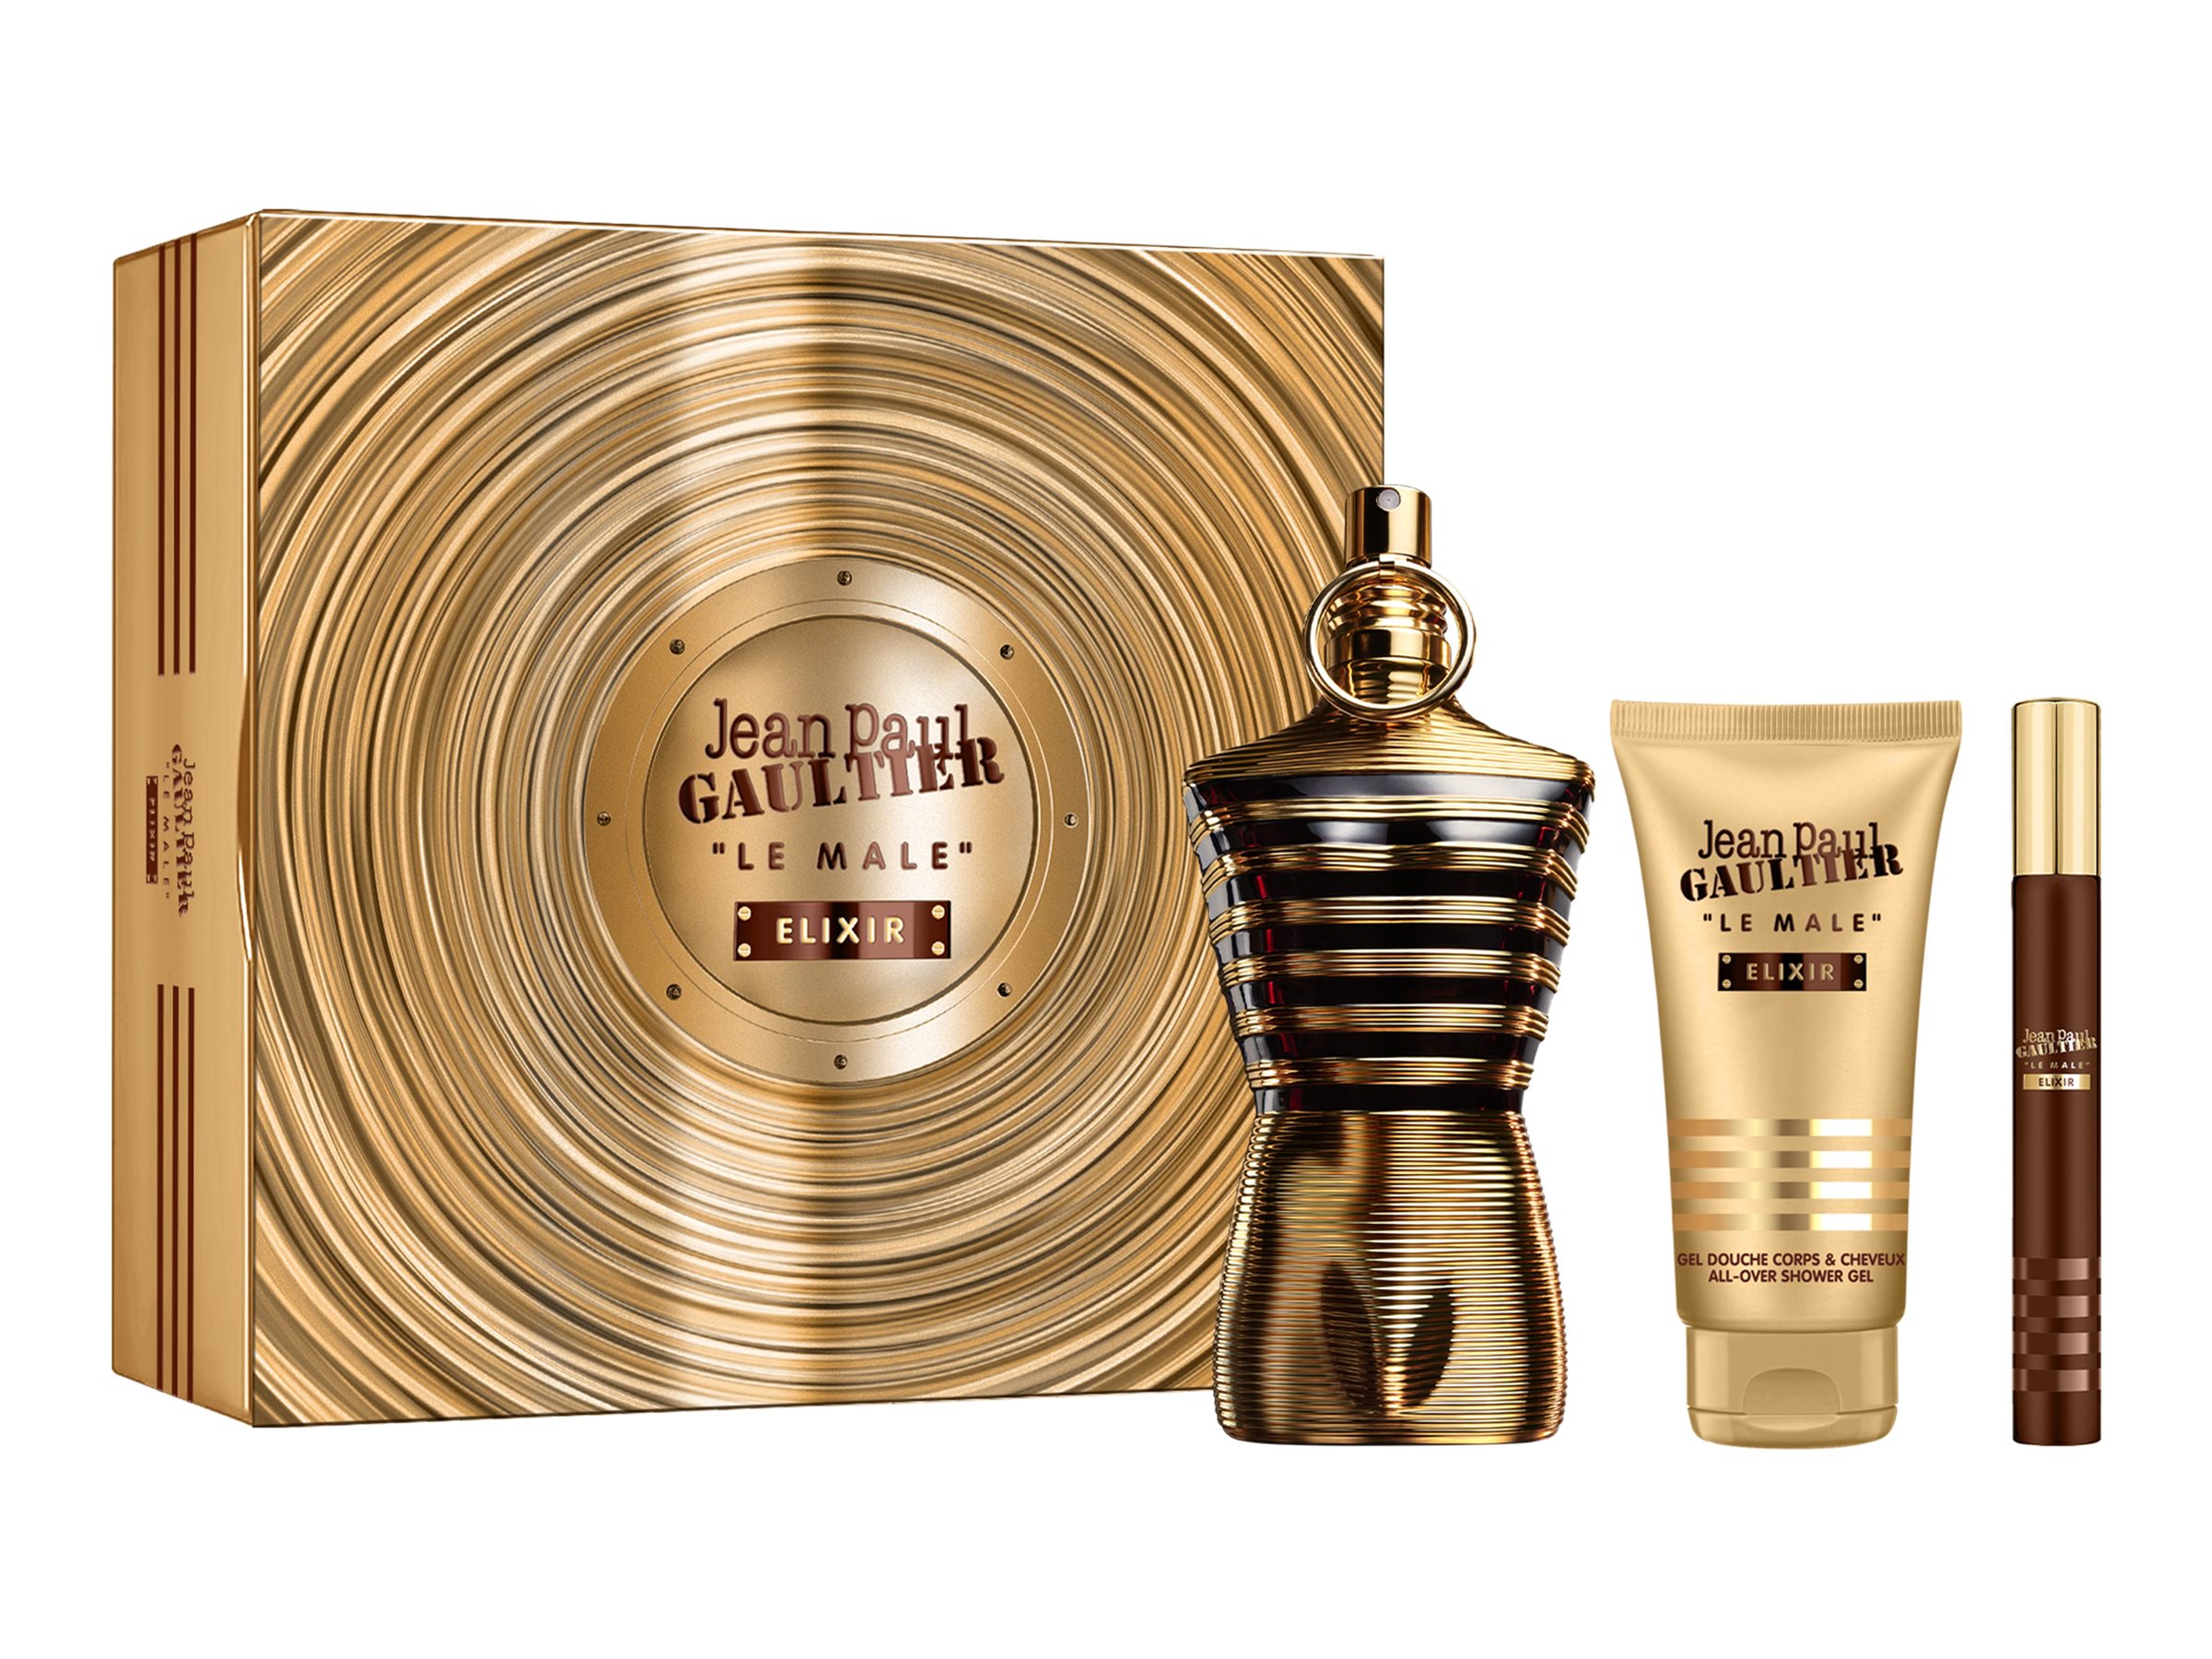 Jean Paul Gaultier Le Male Elixir Parfum Gift Set - 3 piece